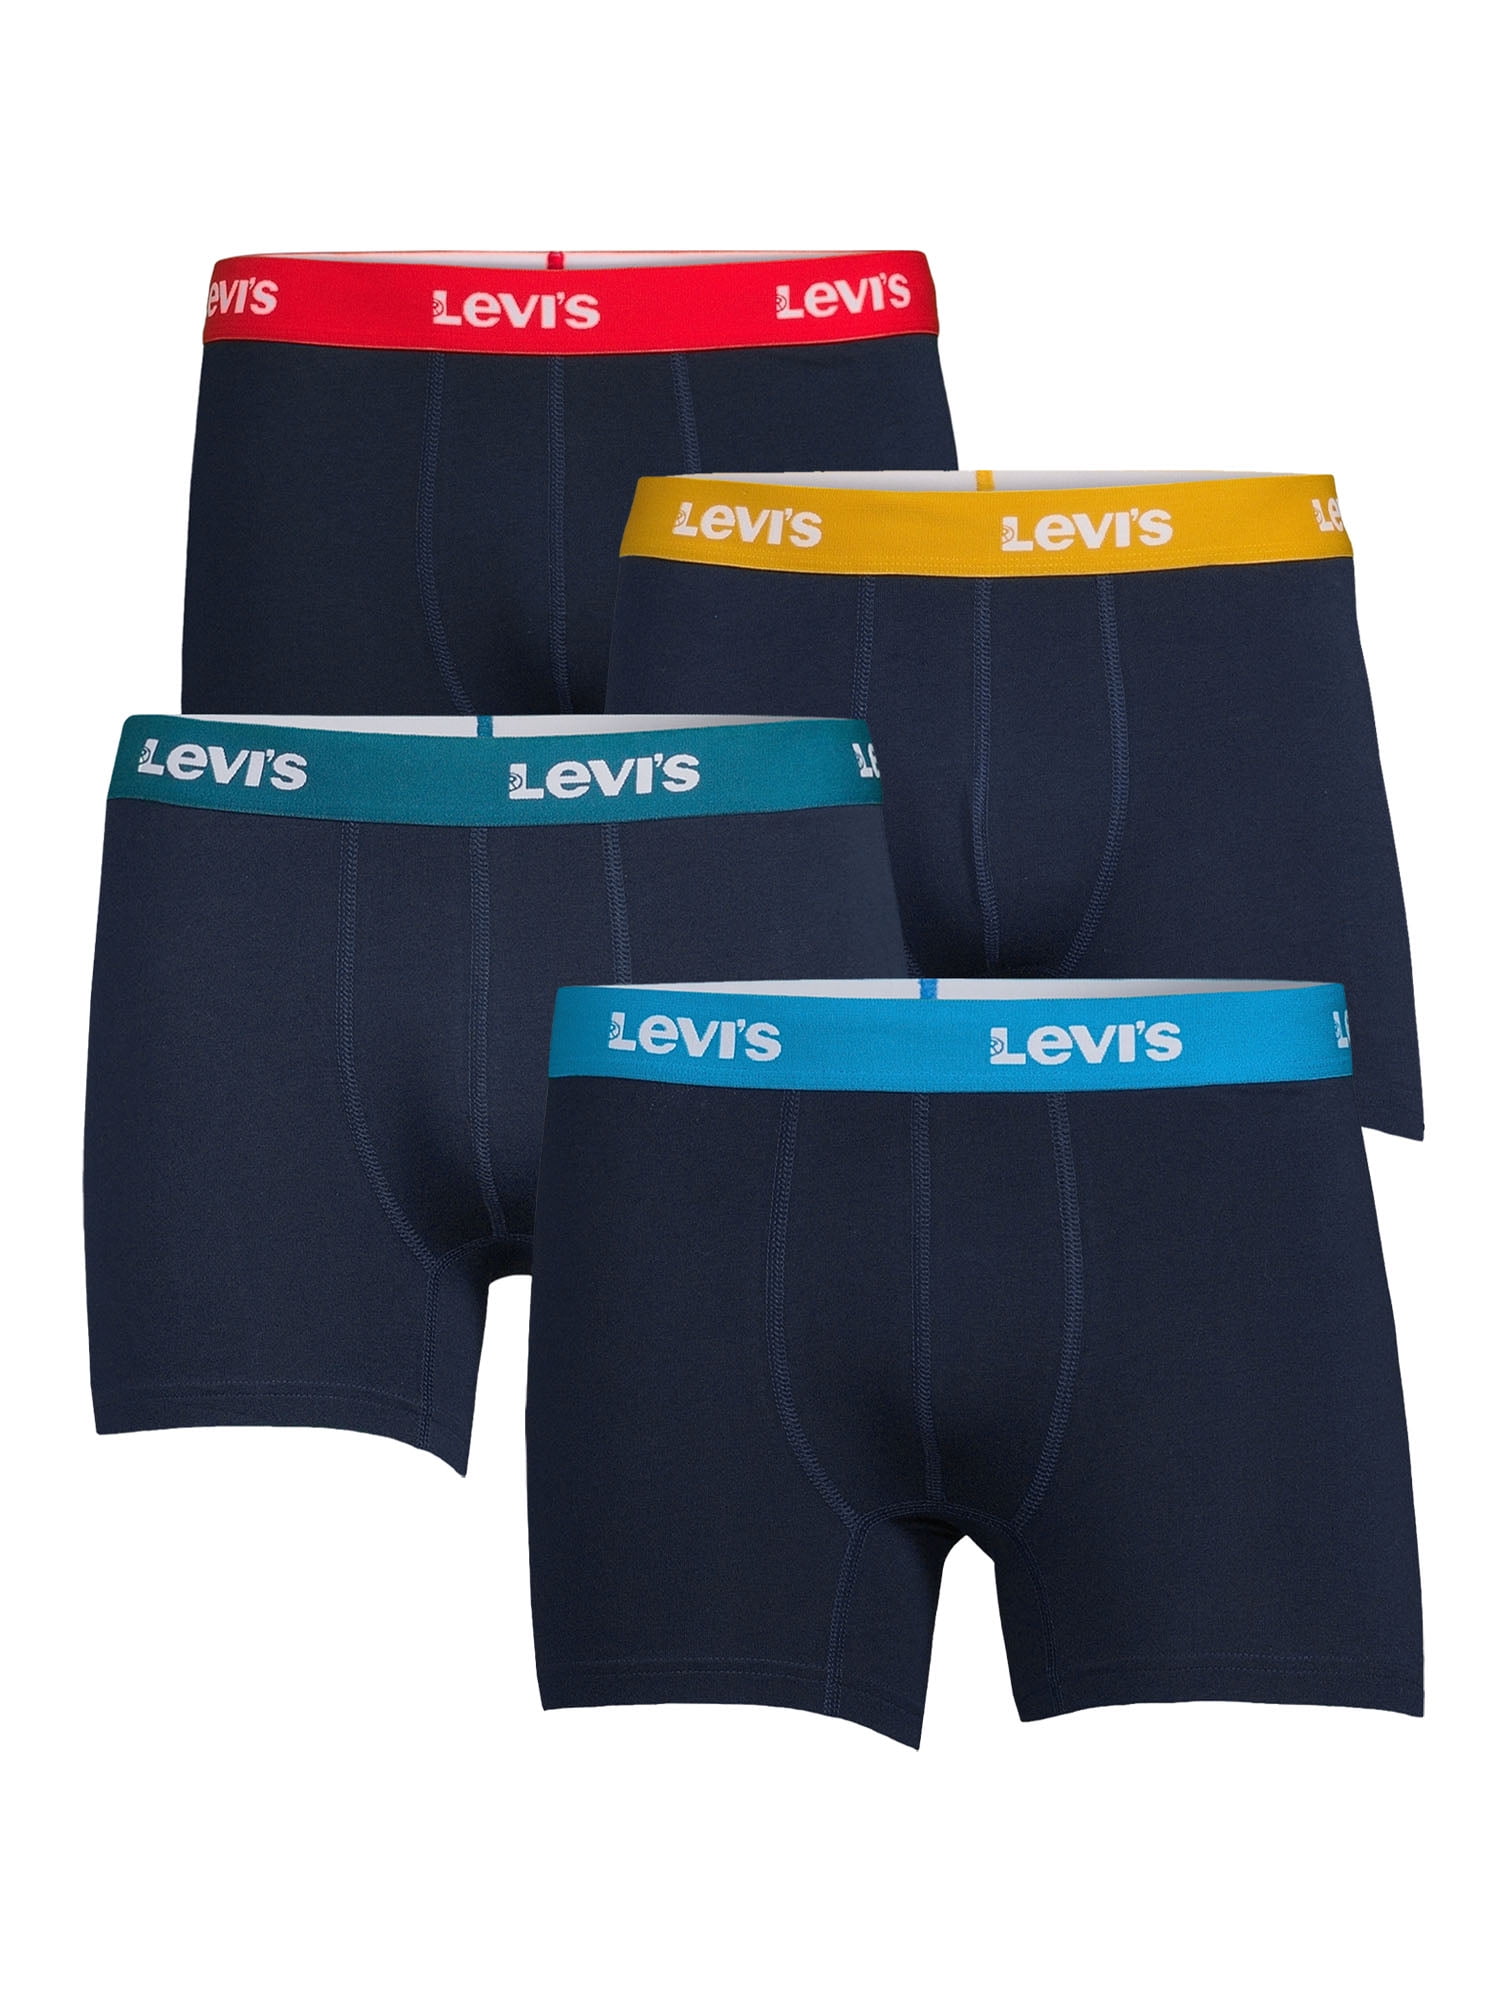 Details about   Levi's Mens Stretch Boxer Brief Underwear Breathable Stretch Underwear 4 Pack 